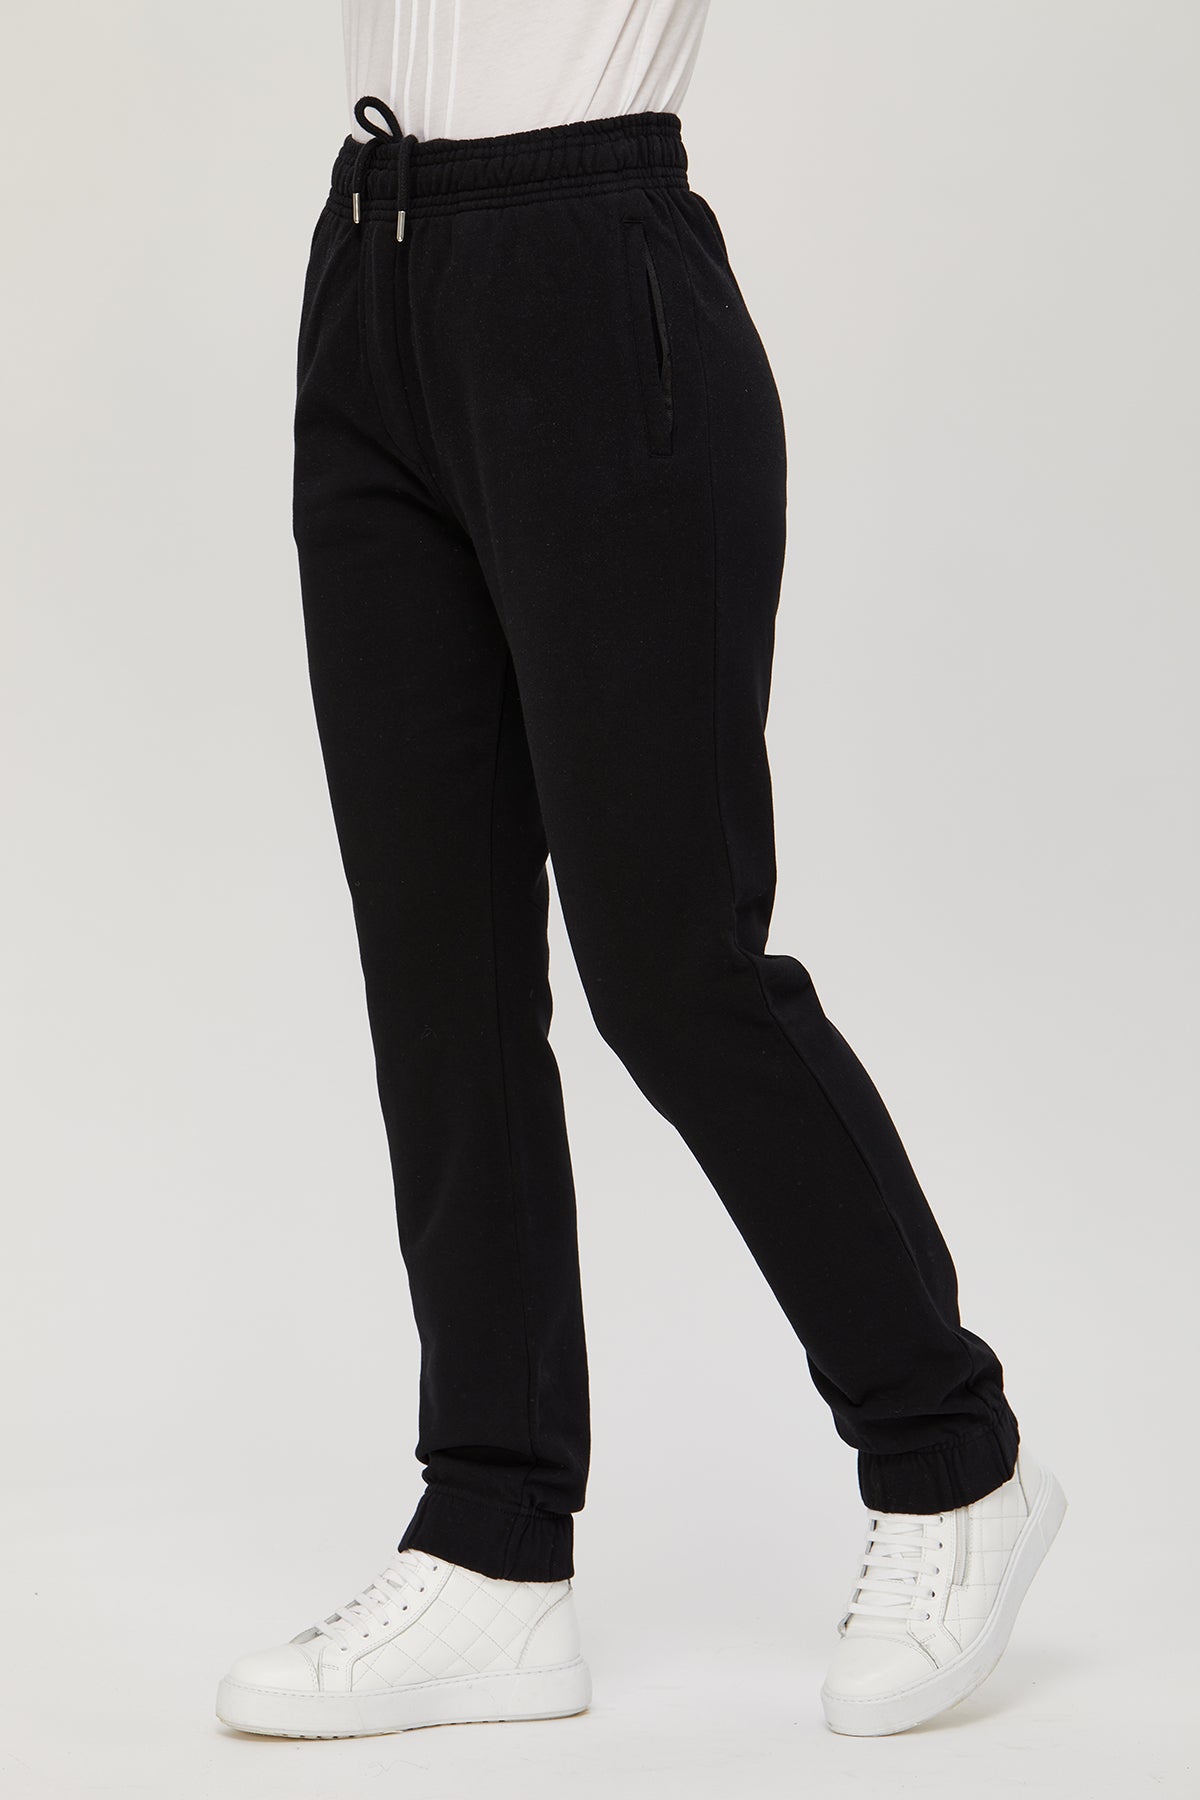 Women's sweatpants - active fleece joggers . 100 % great quality Turkish Pima cotton preshrunk. Zippered pockets. Sports. Gym, Yoga.